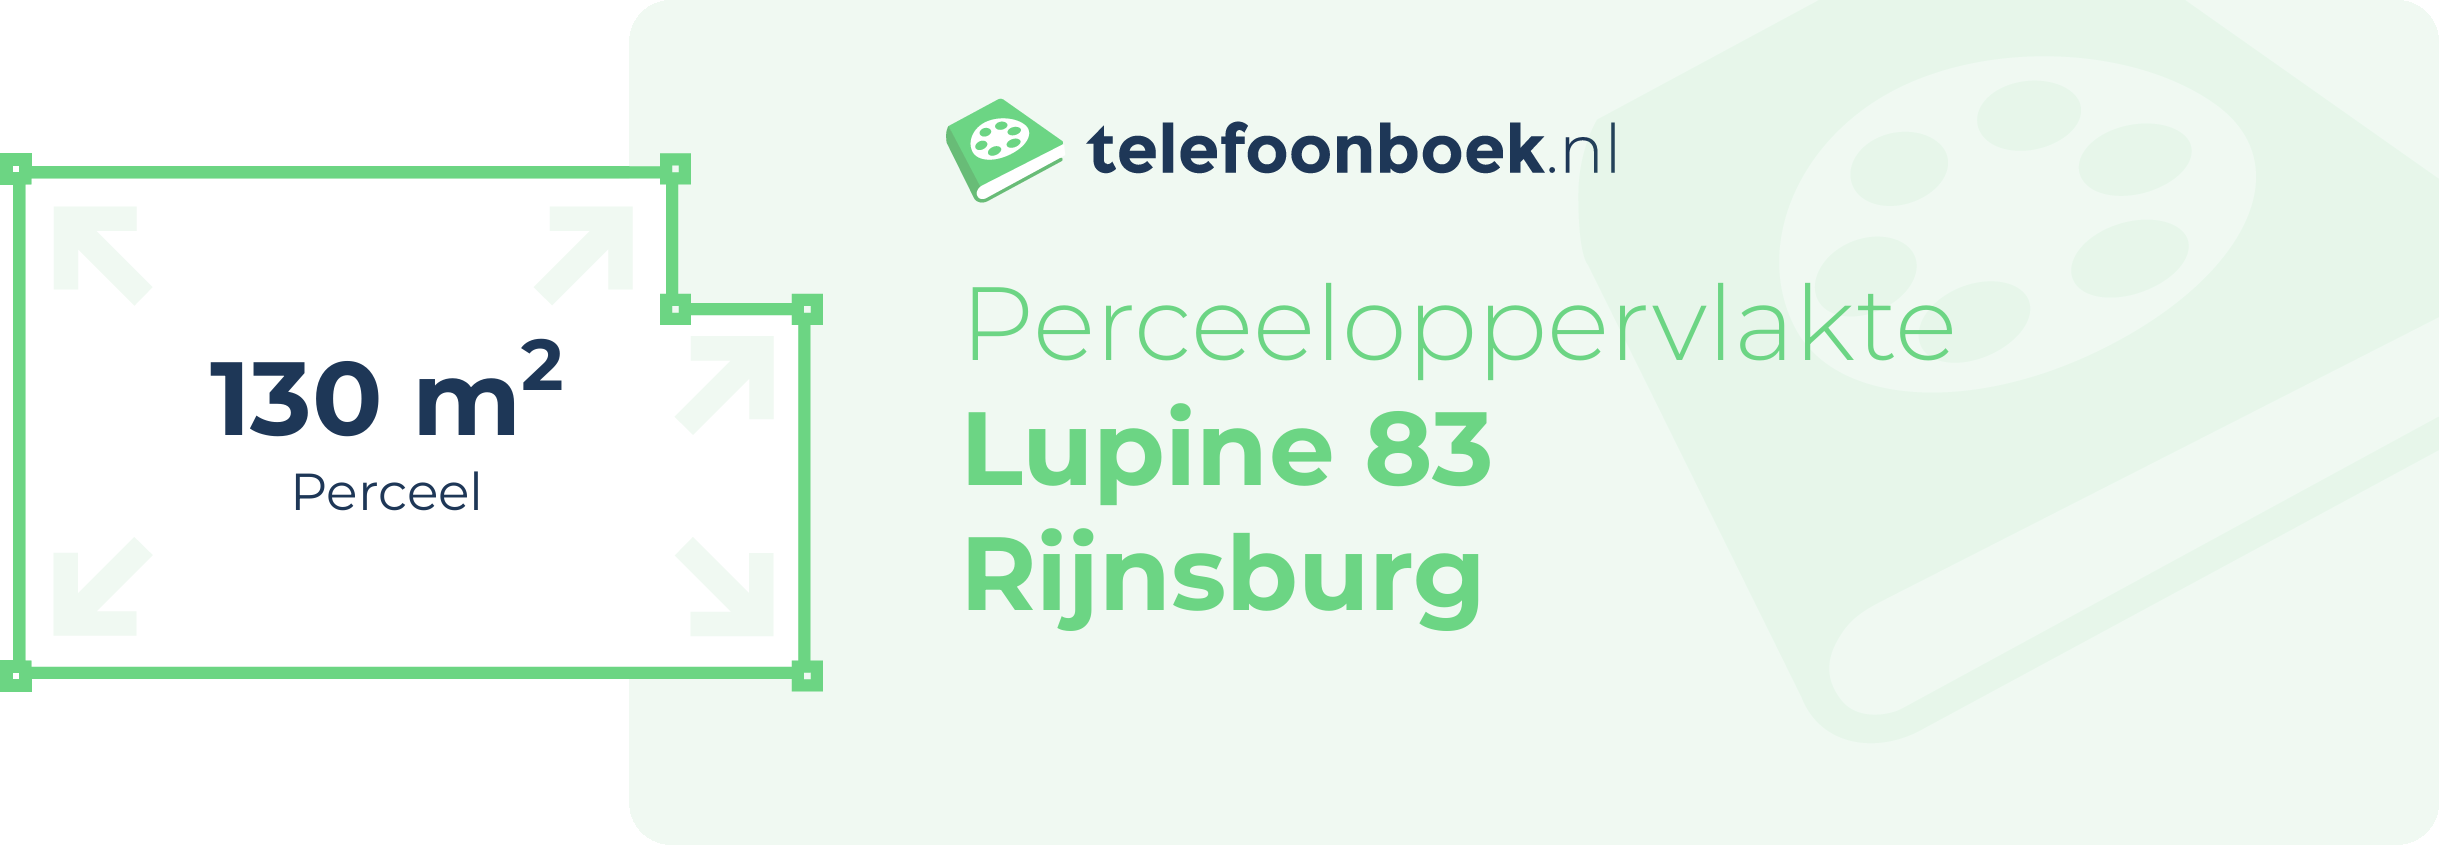 Perceeloppervlakte Lupine 83 Rijnsburg